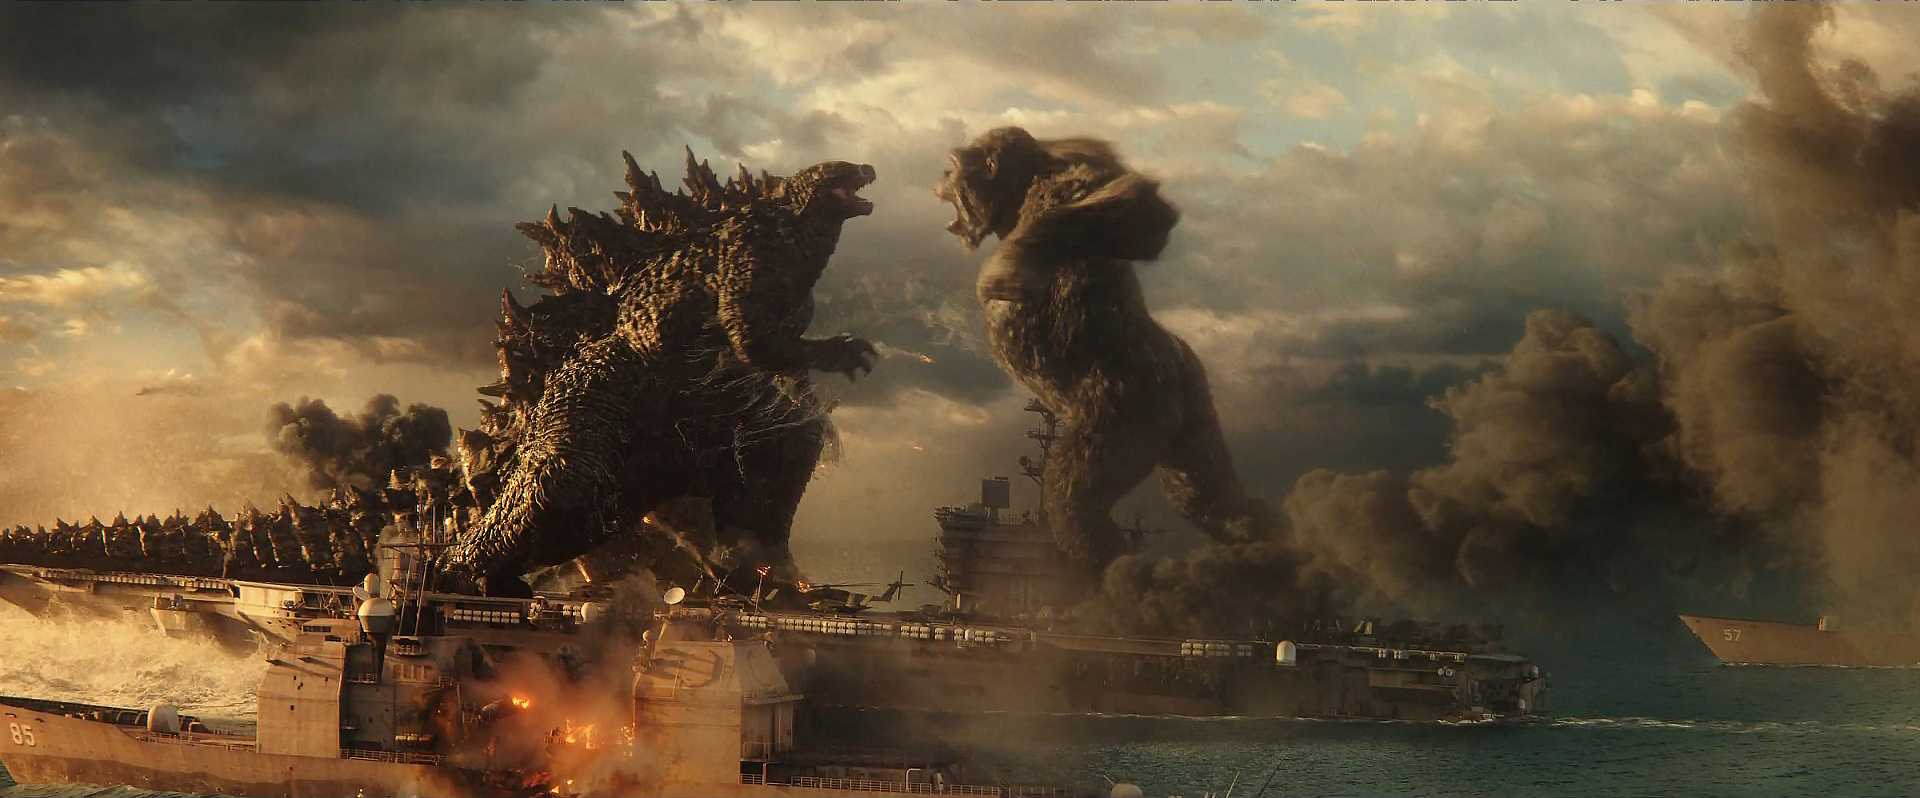 Godzilla vs Kong Trailer Still 40 - Kong punches Godzilla